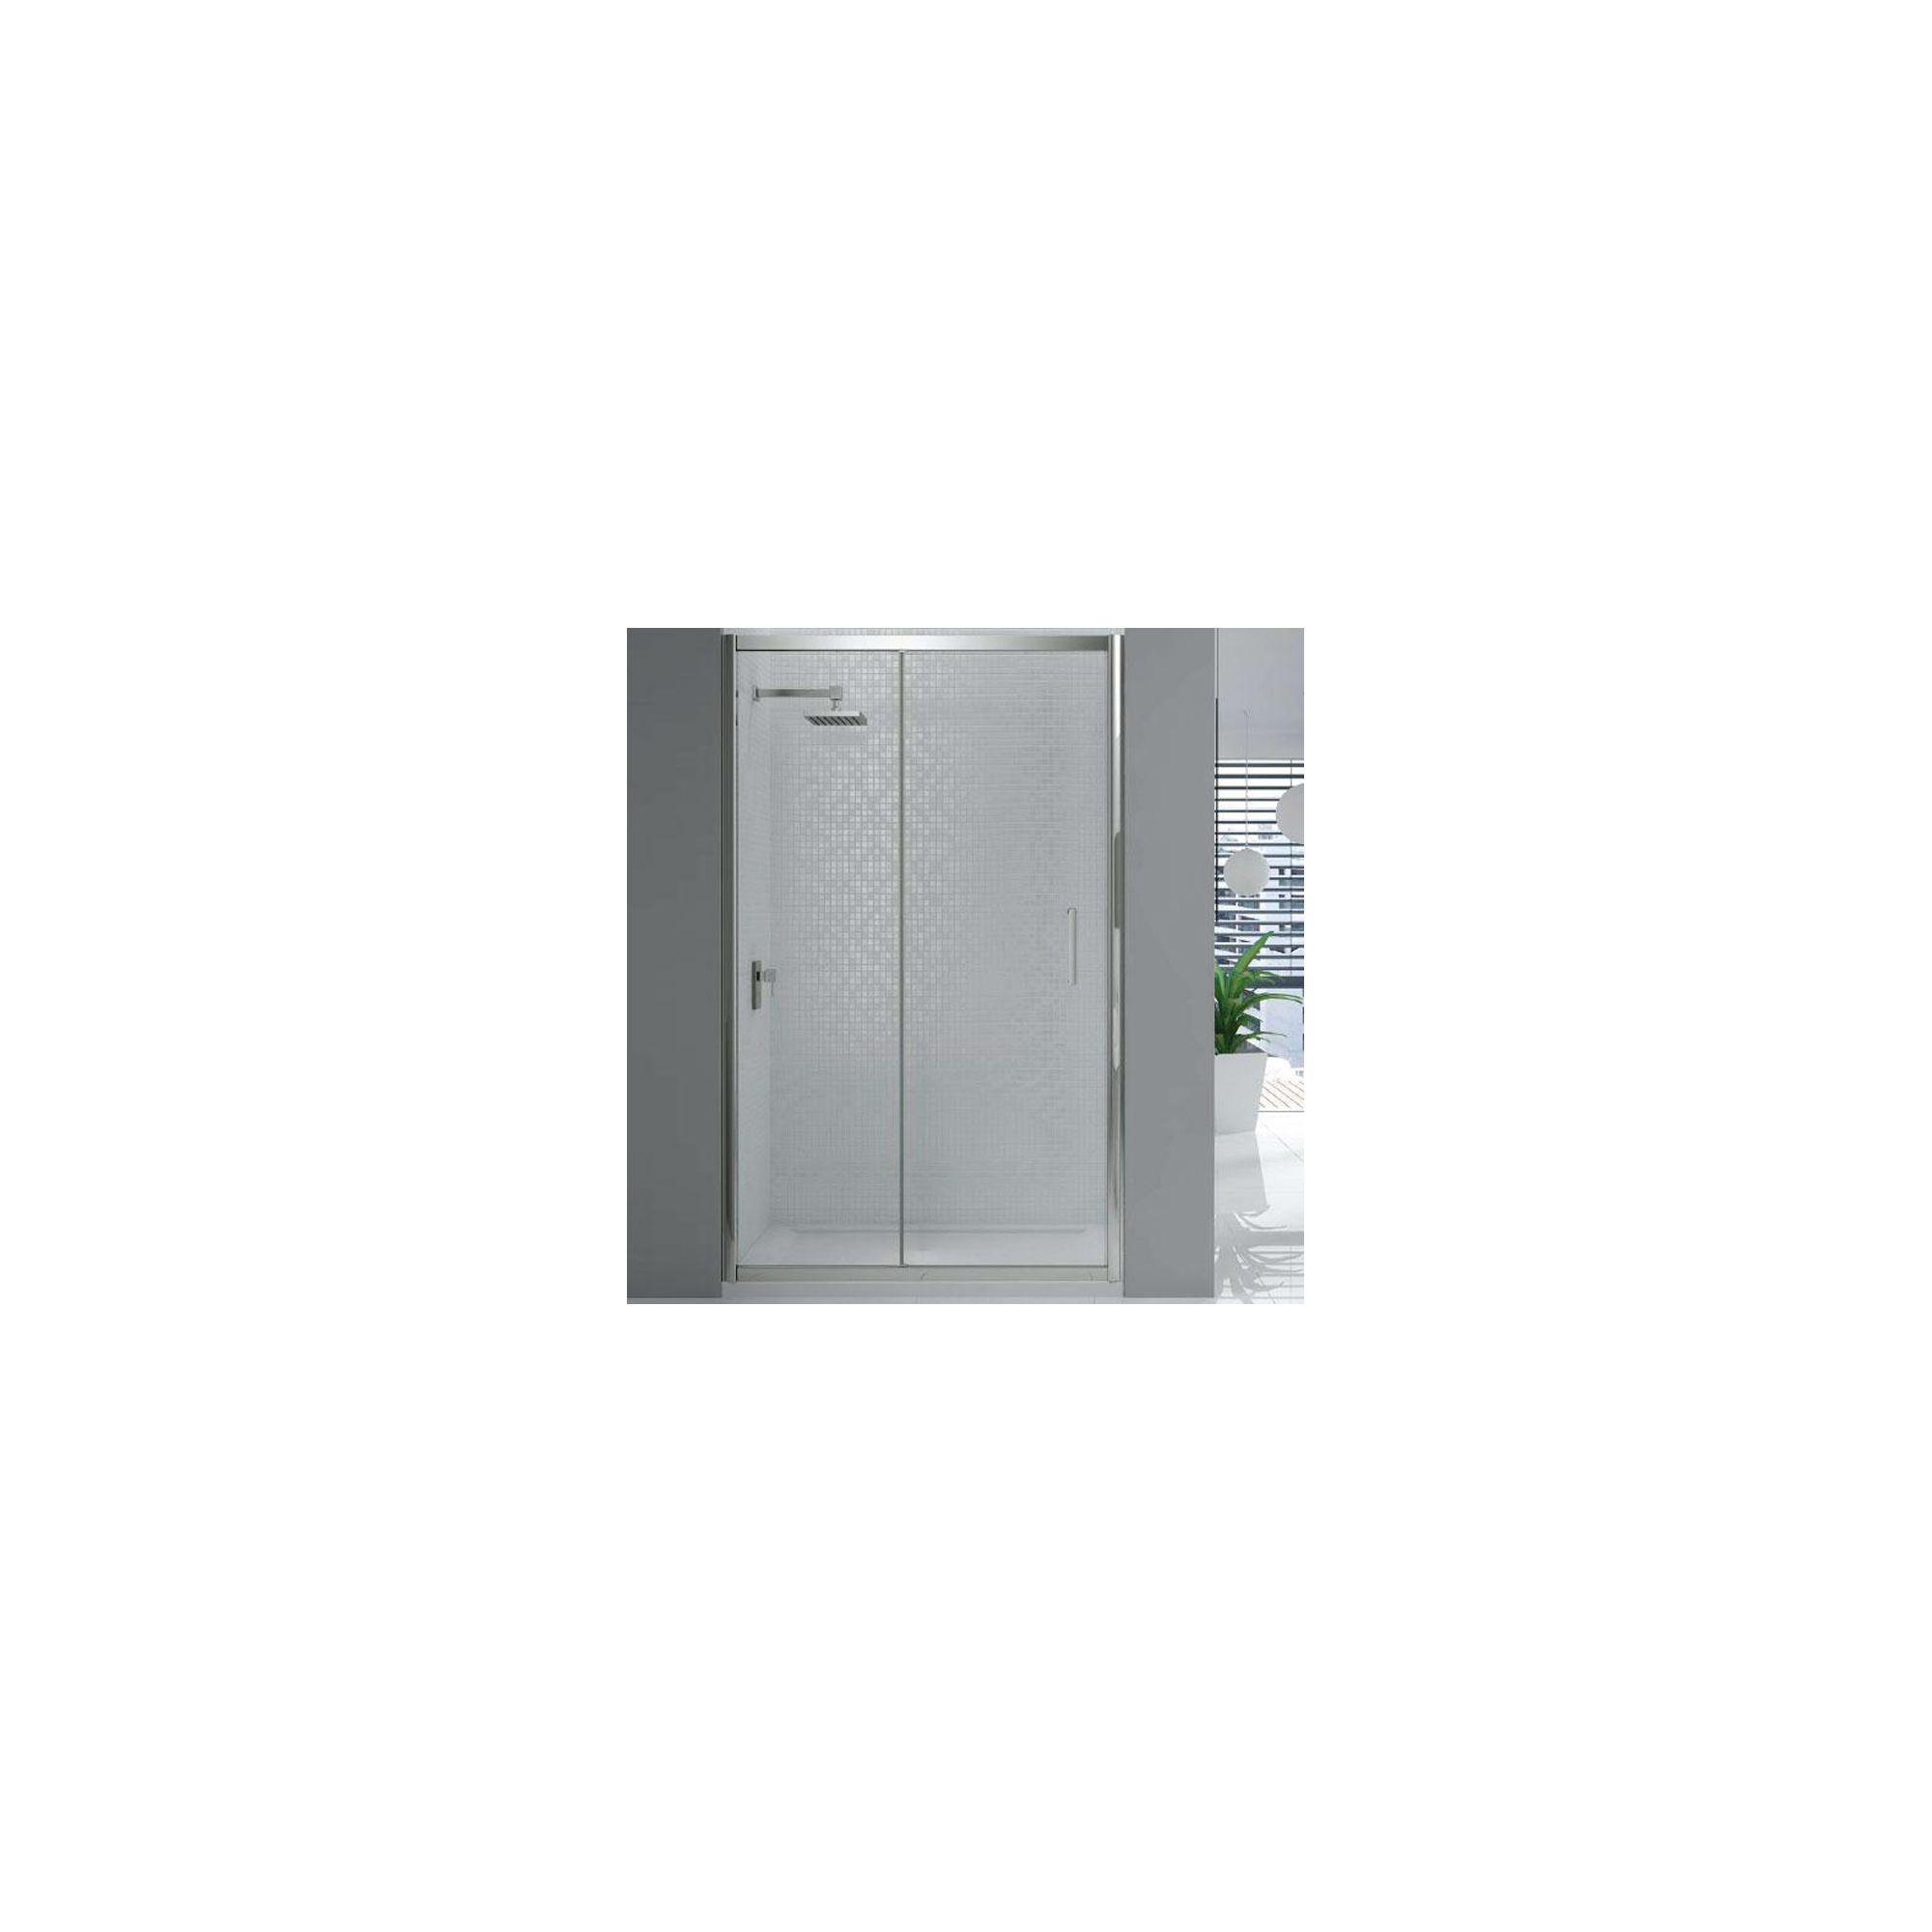 Merlyn Vivid Six Sliding Shower Door, 1600mm Wide, 6mm Glass at Tesco Direct